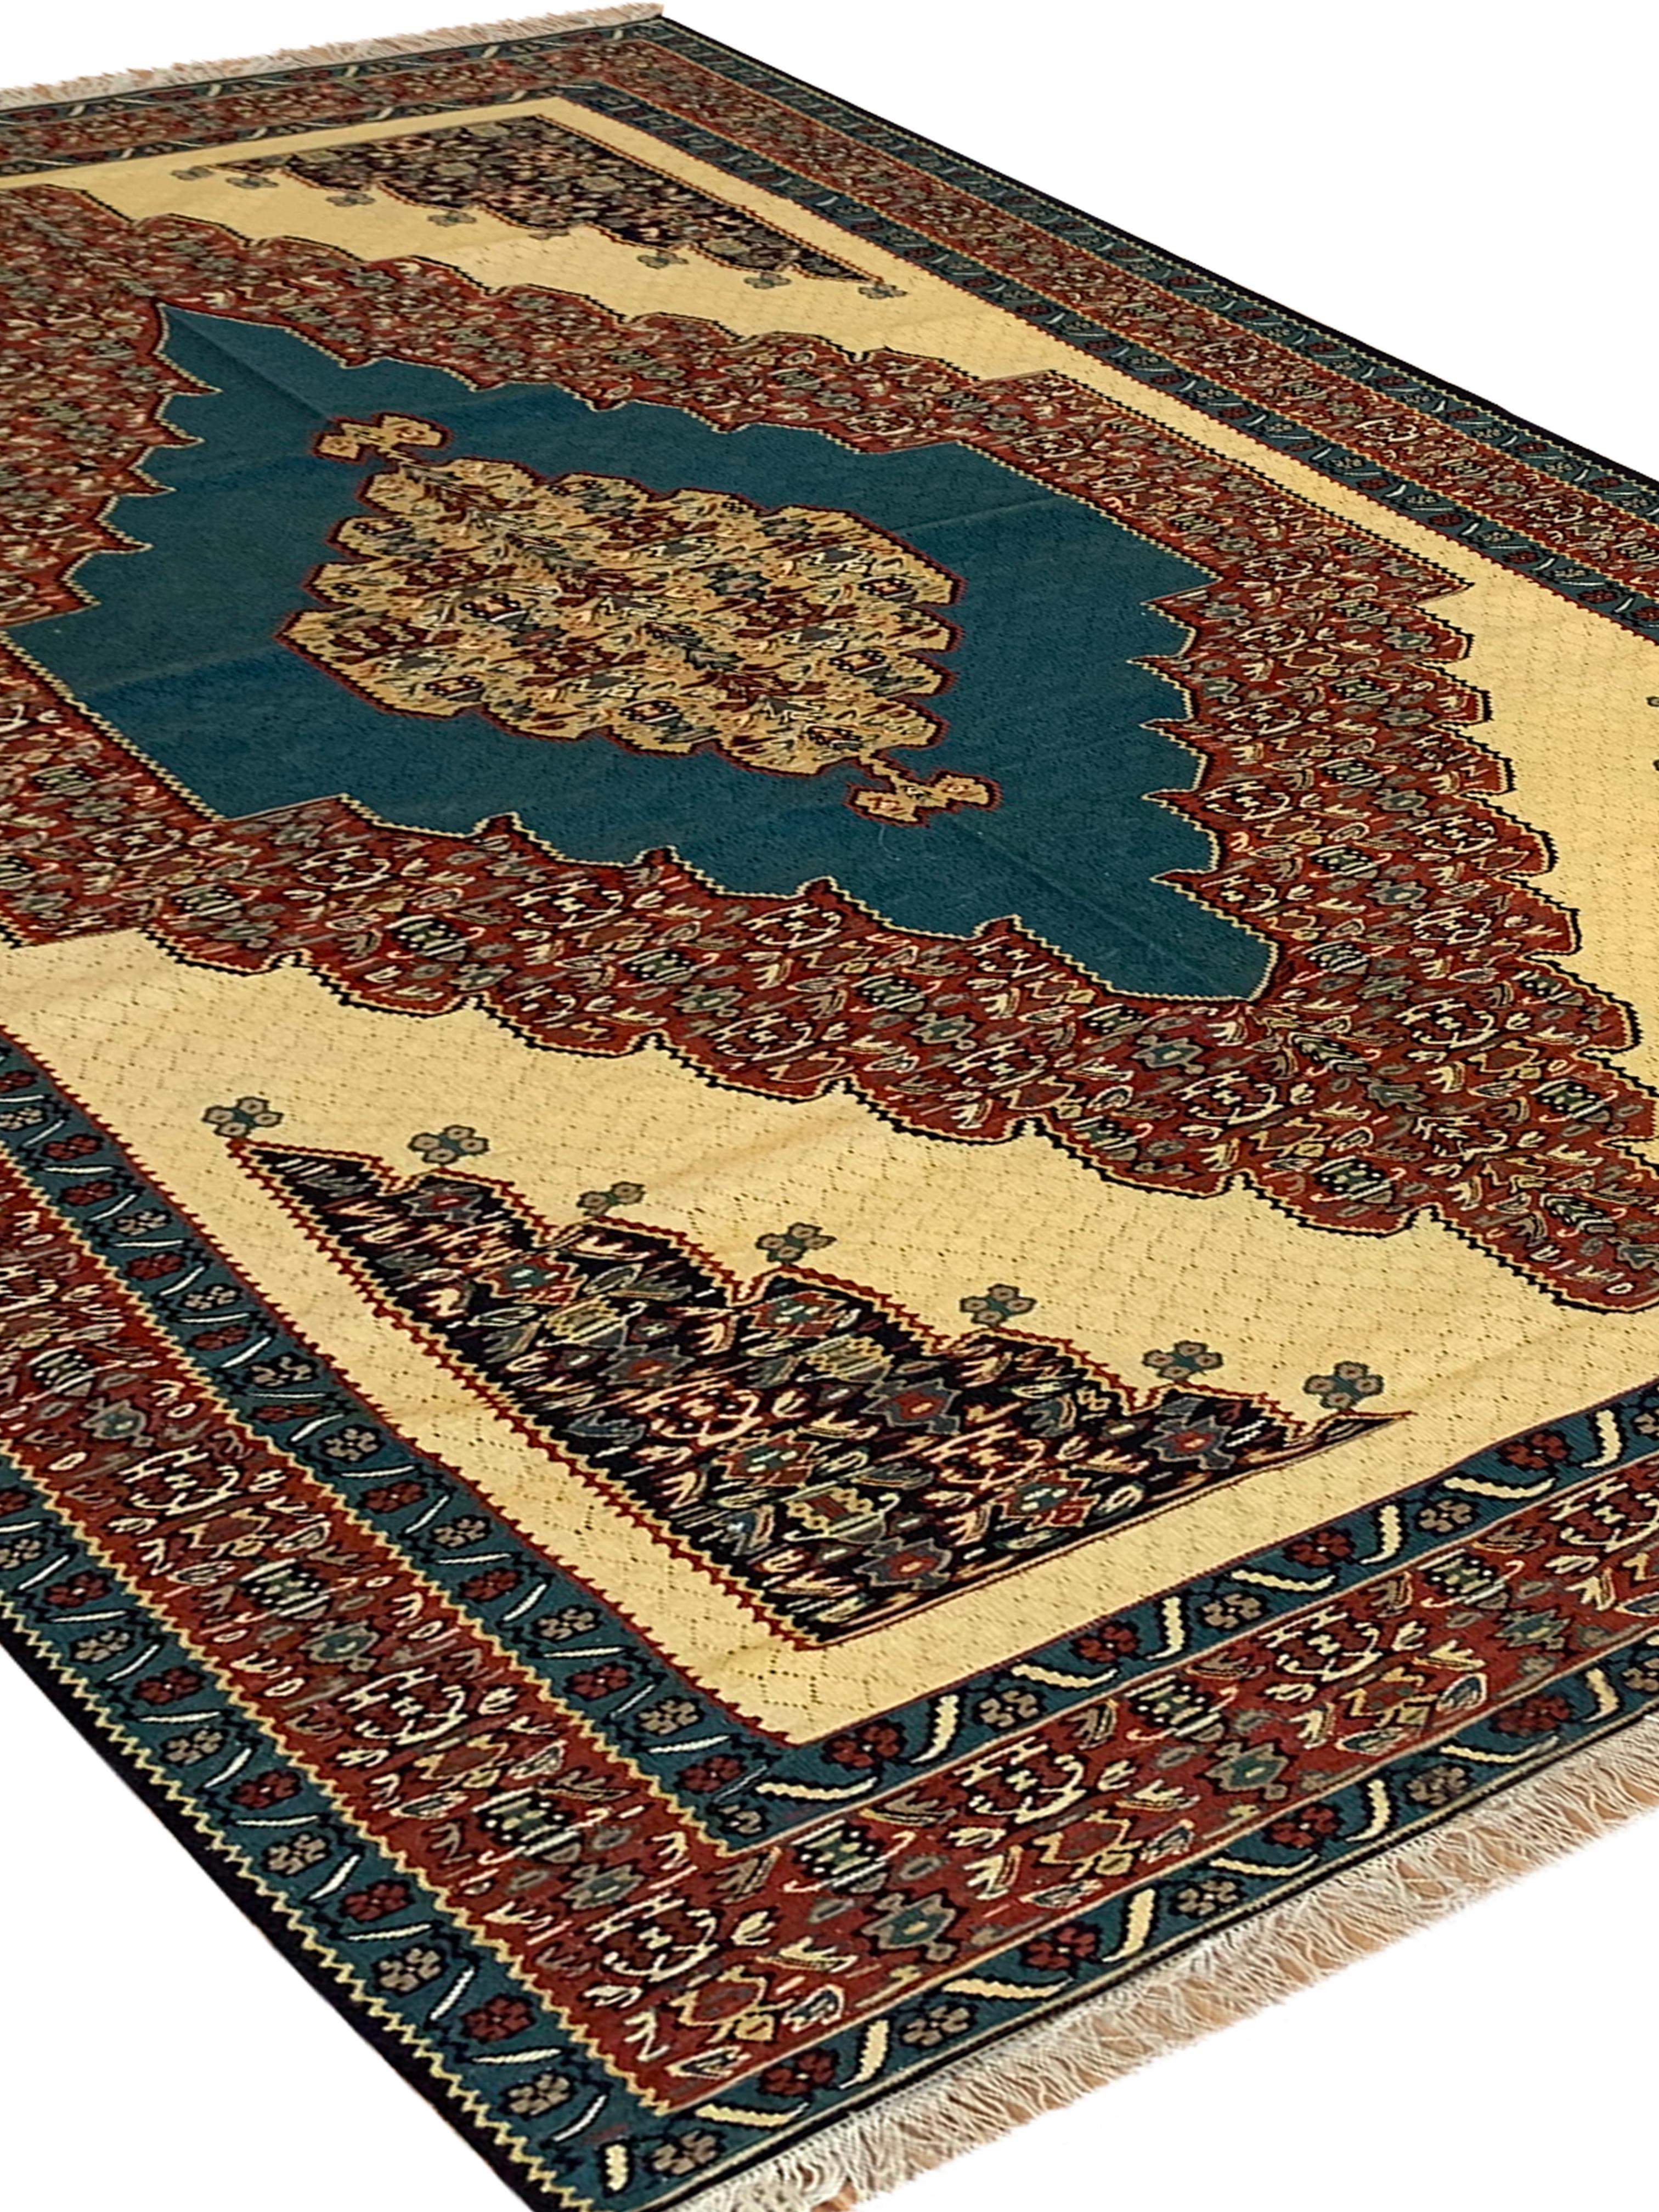 Iraqi Flatwoven Carpet Beige Blue Wool Kilim Handmade Oriental Living Area Rug For Sale